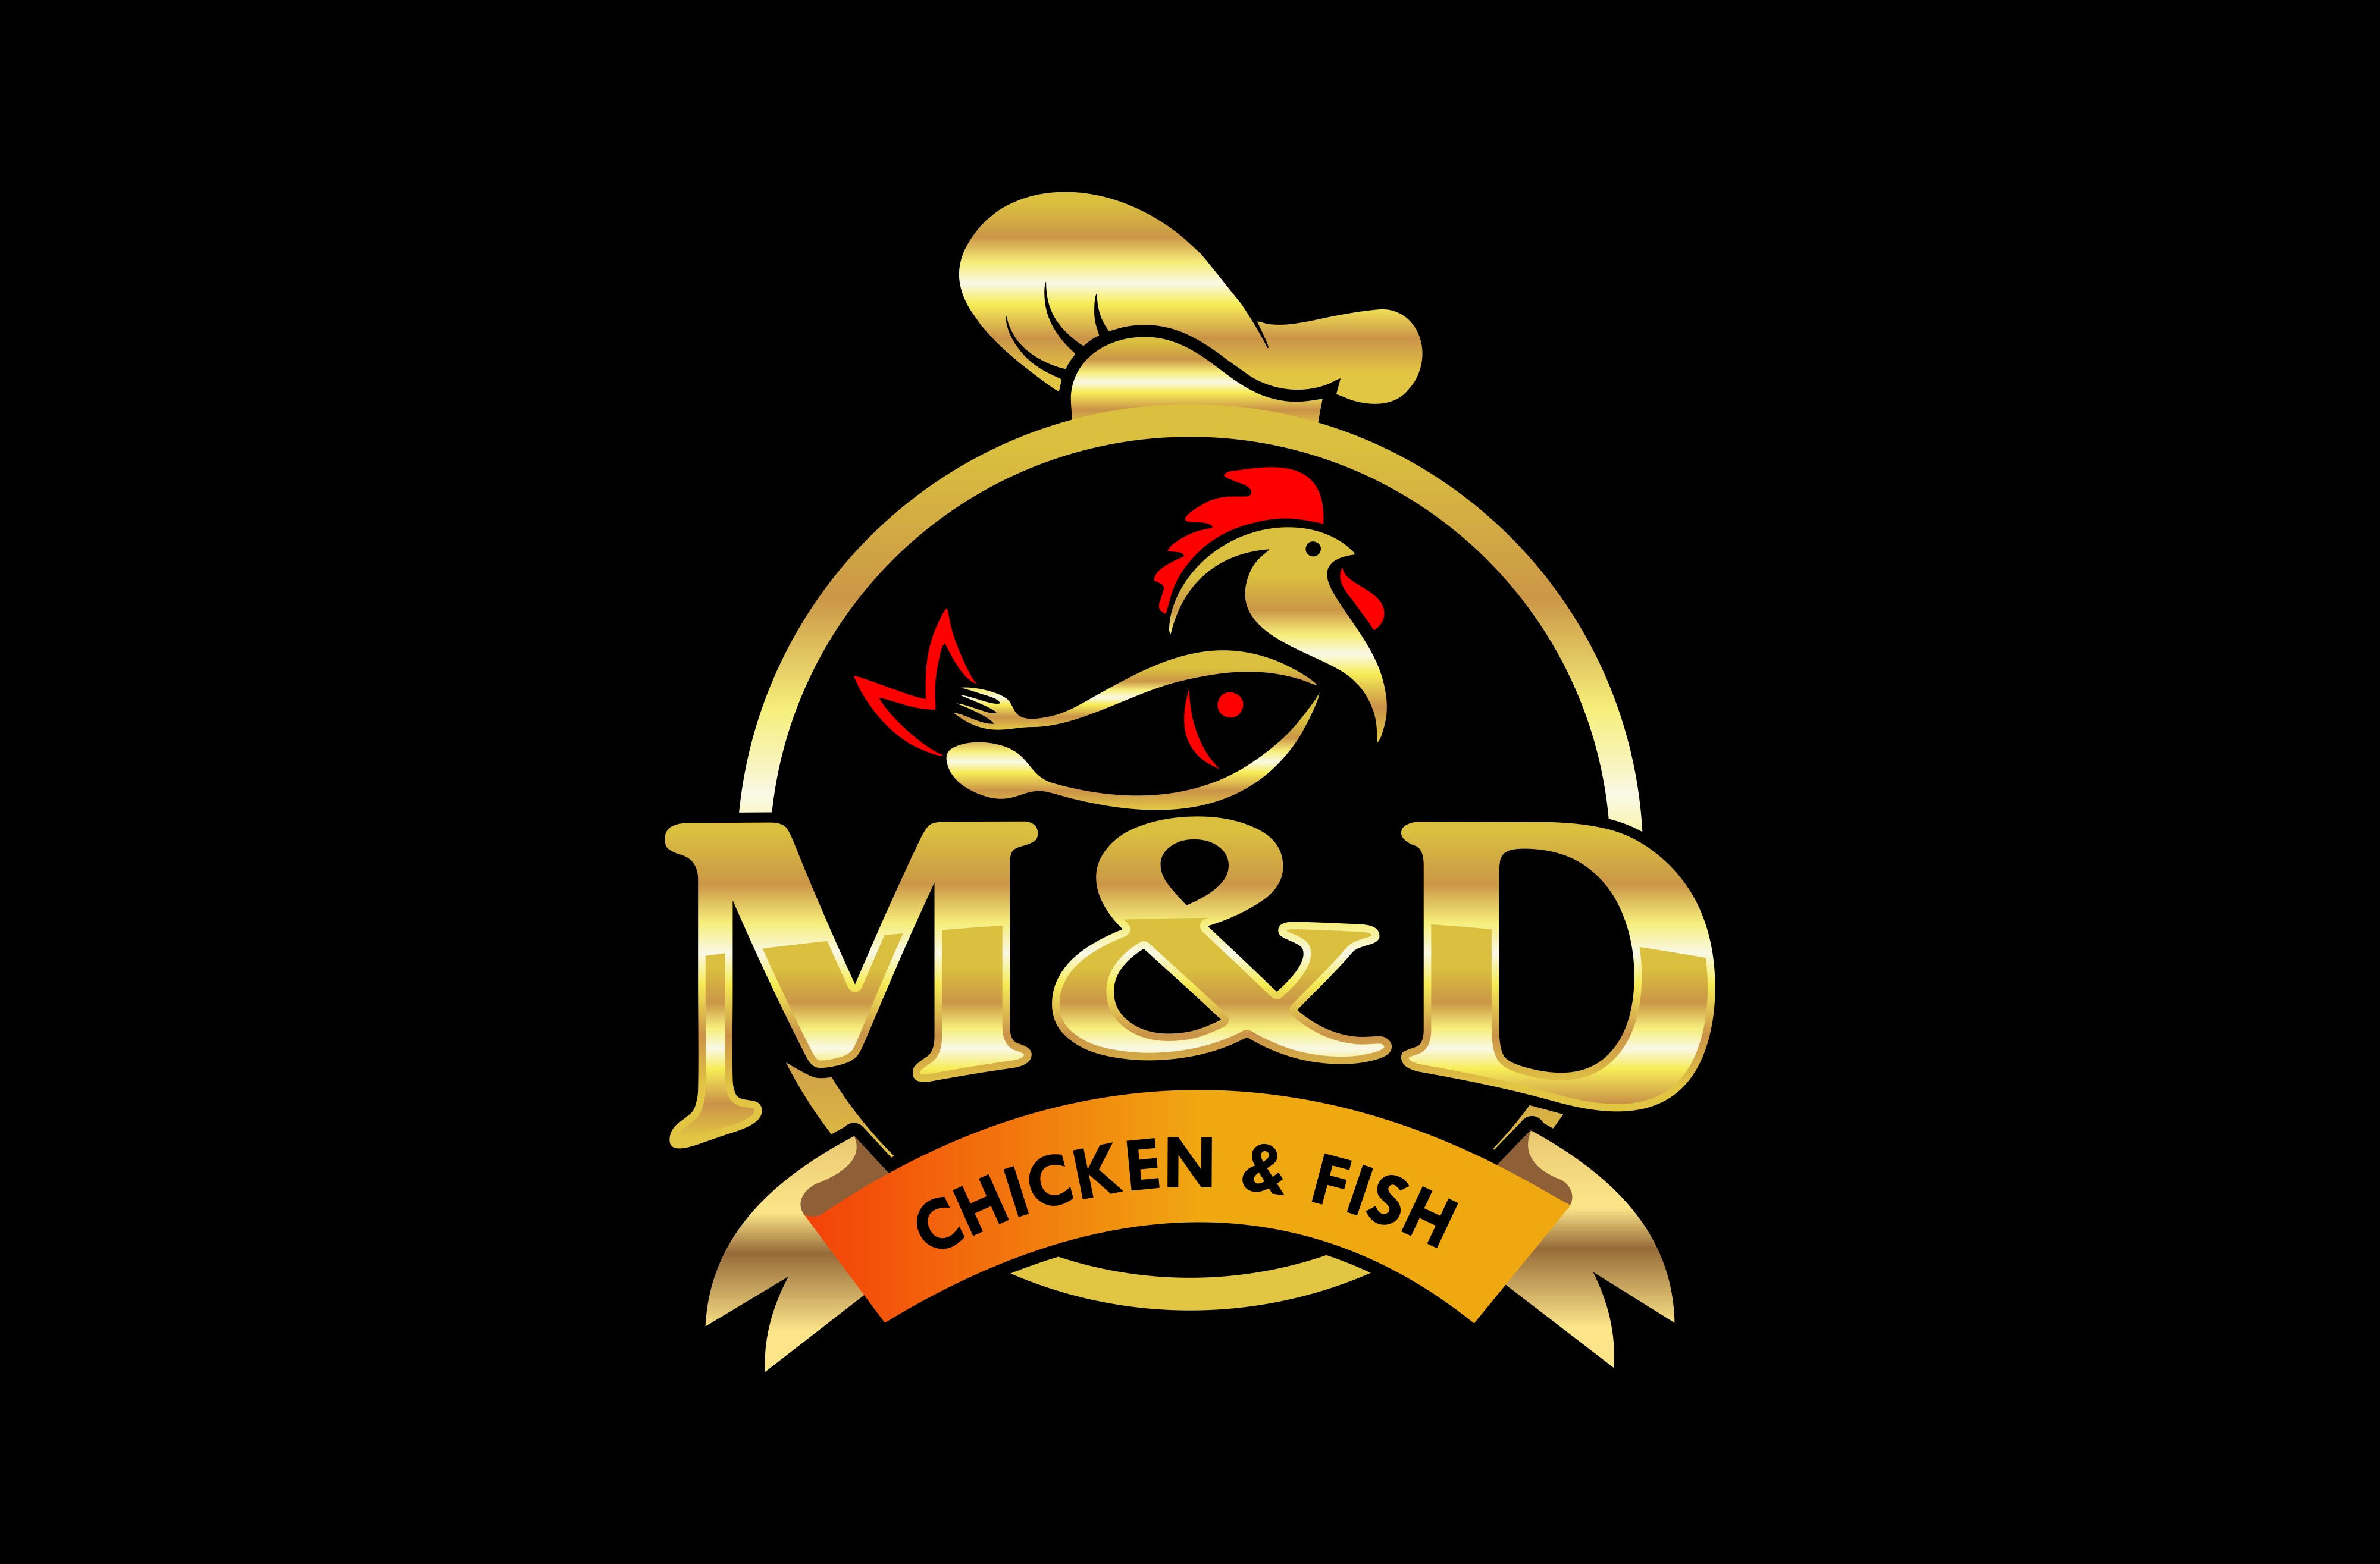 M&D - Soul Food Restaurant in Bryans Road, MD